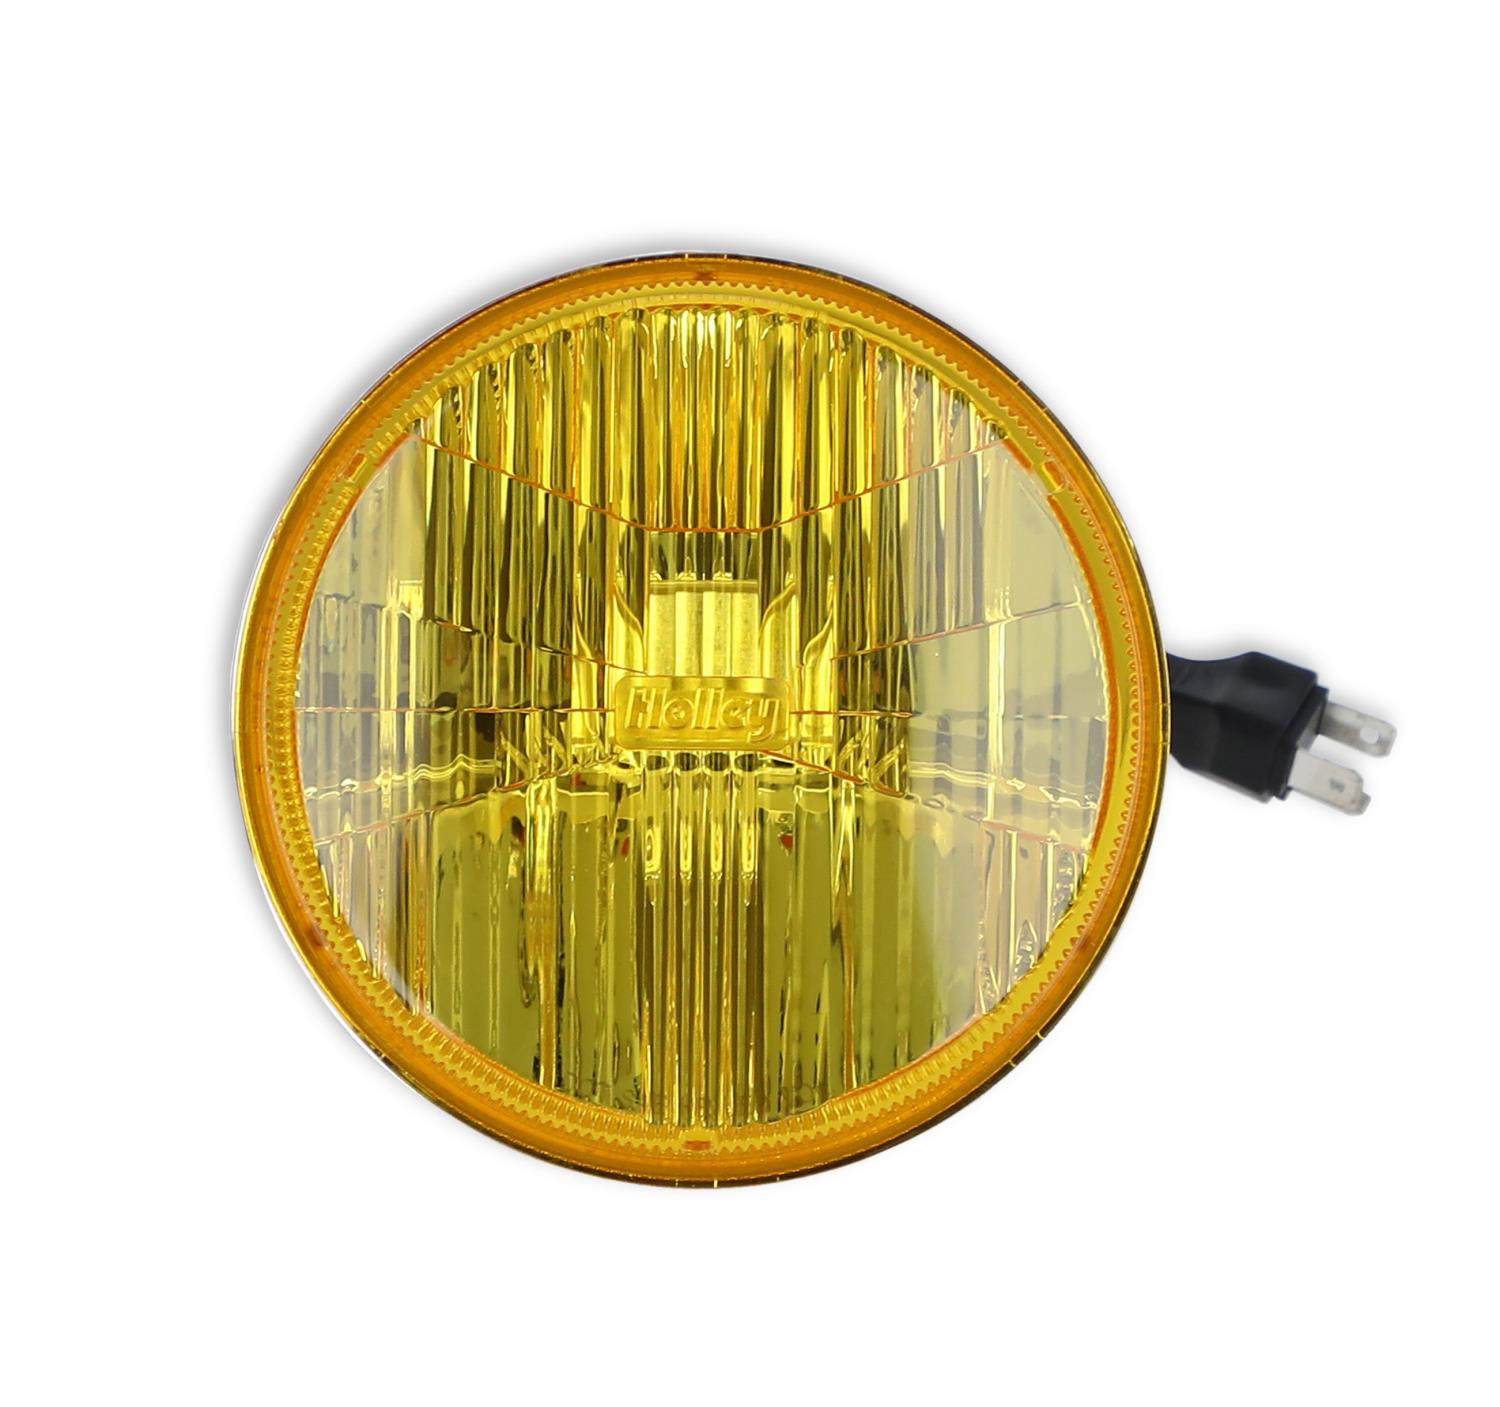 LFRB106 RetroBright LED 5 3/4 in. Round Headlight